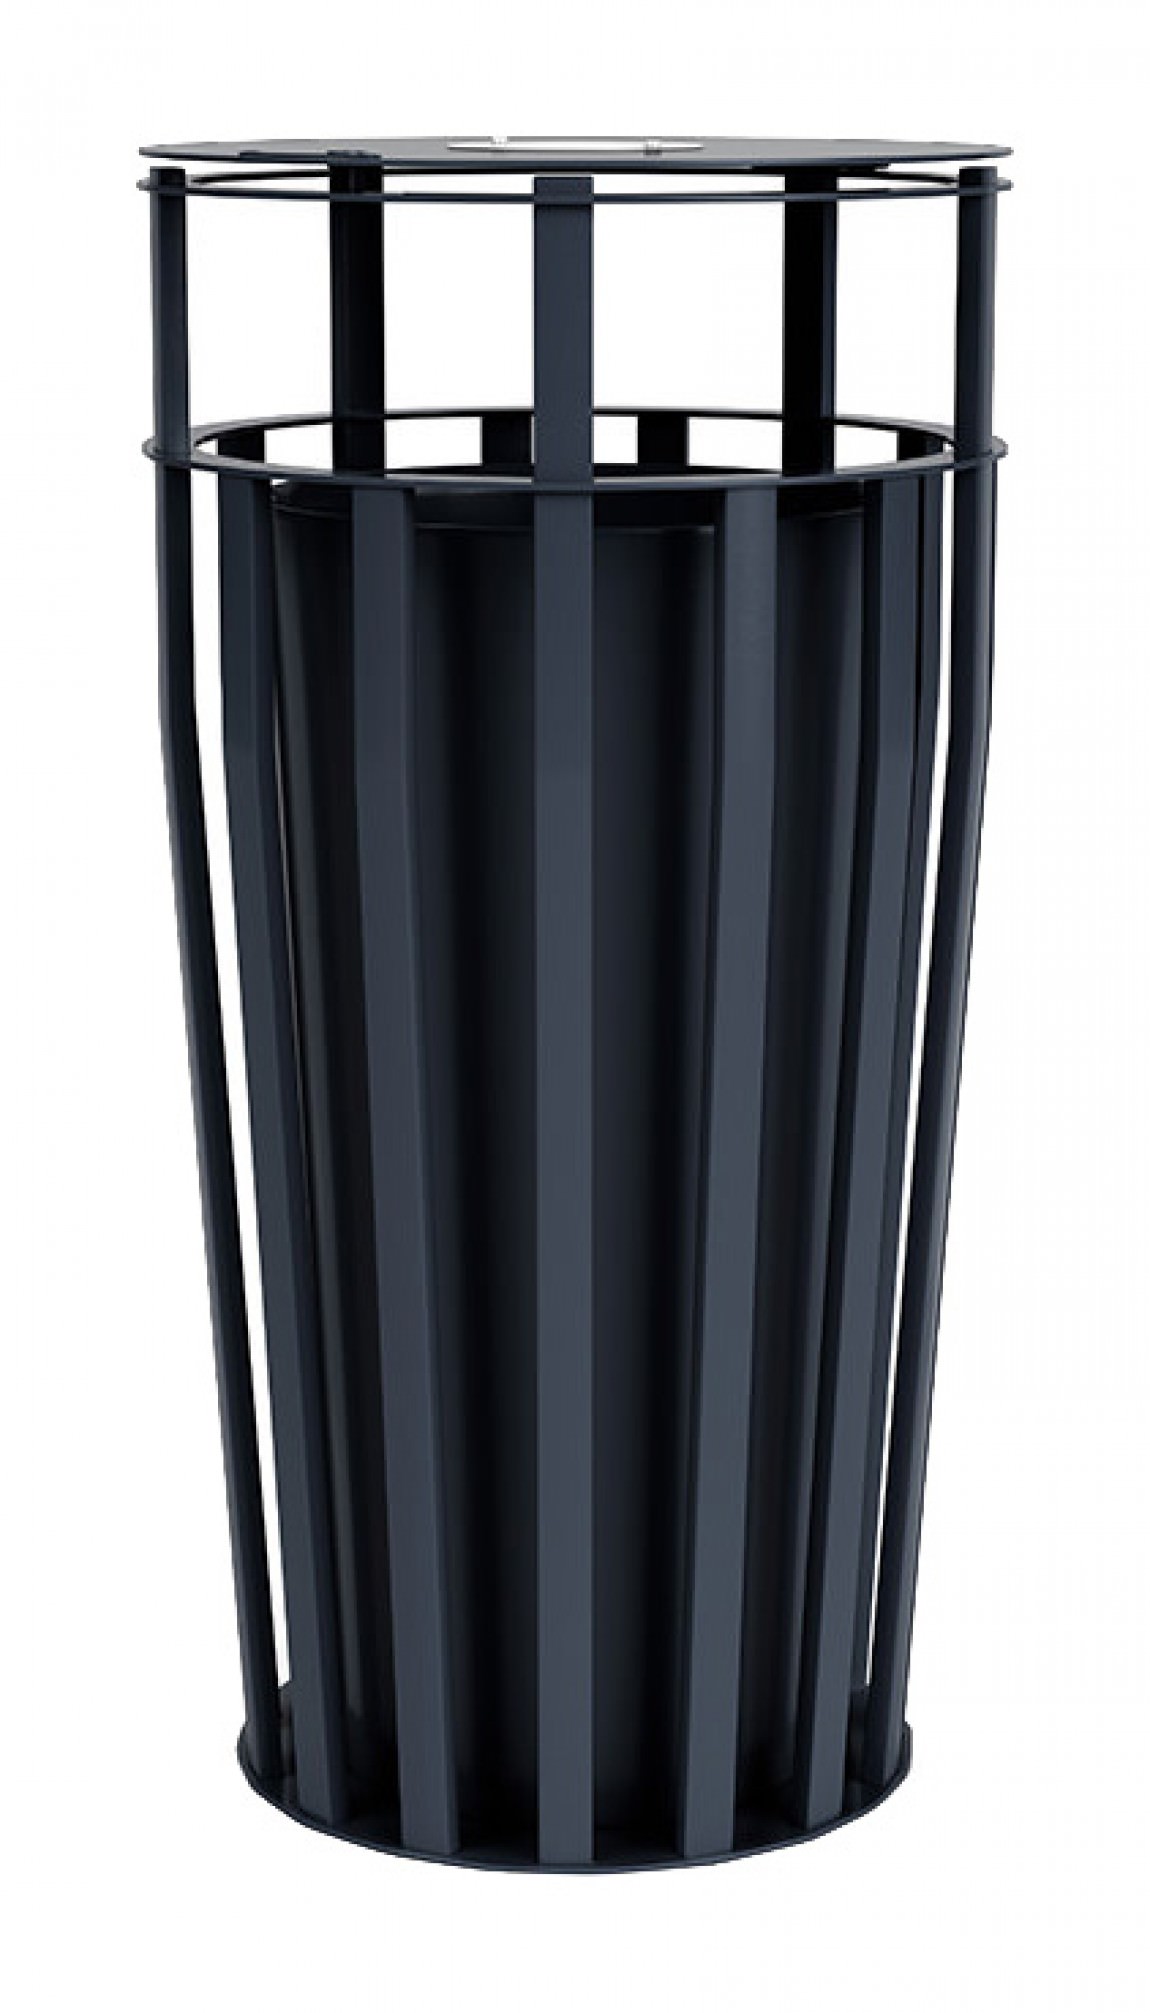 https://madisonliquidators.com/images/p/1150/50601-outdoor-garbage-can-with-lid-1.jpg